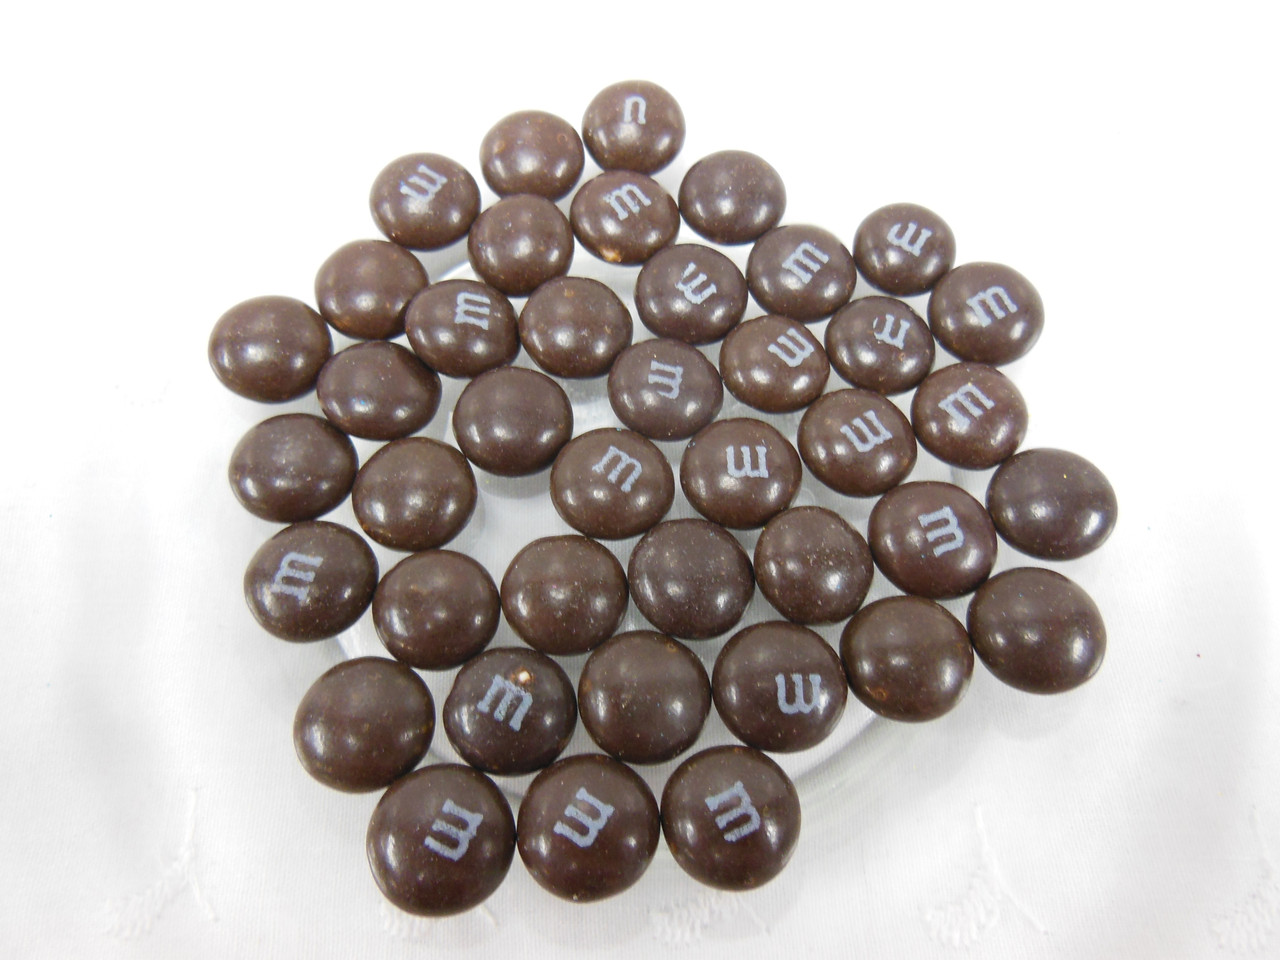 Black M&M's Chocolate Candy